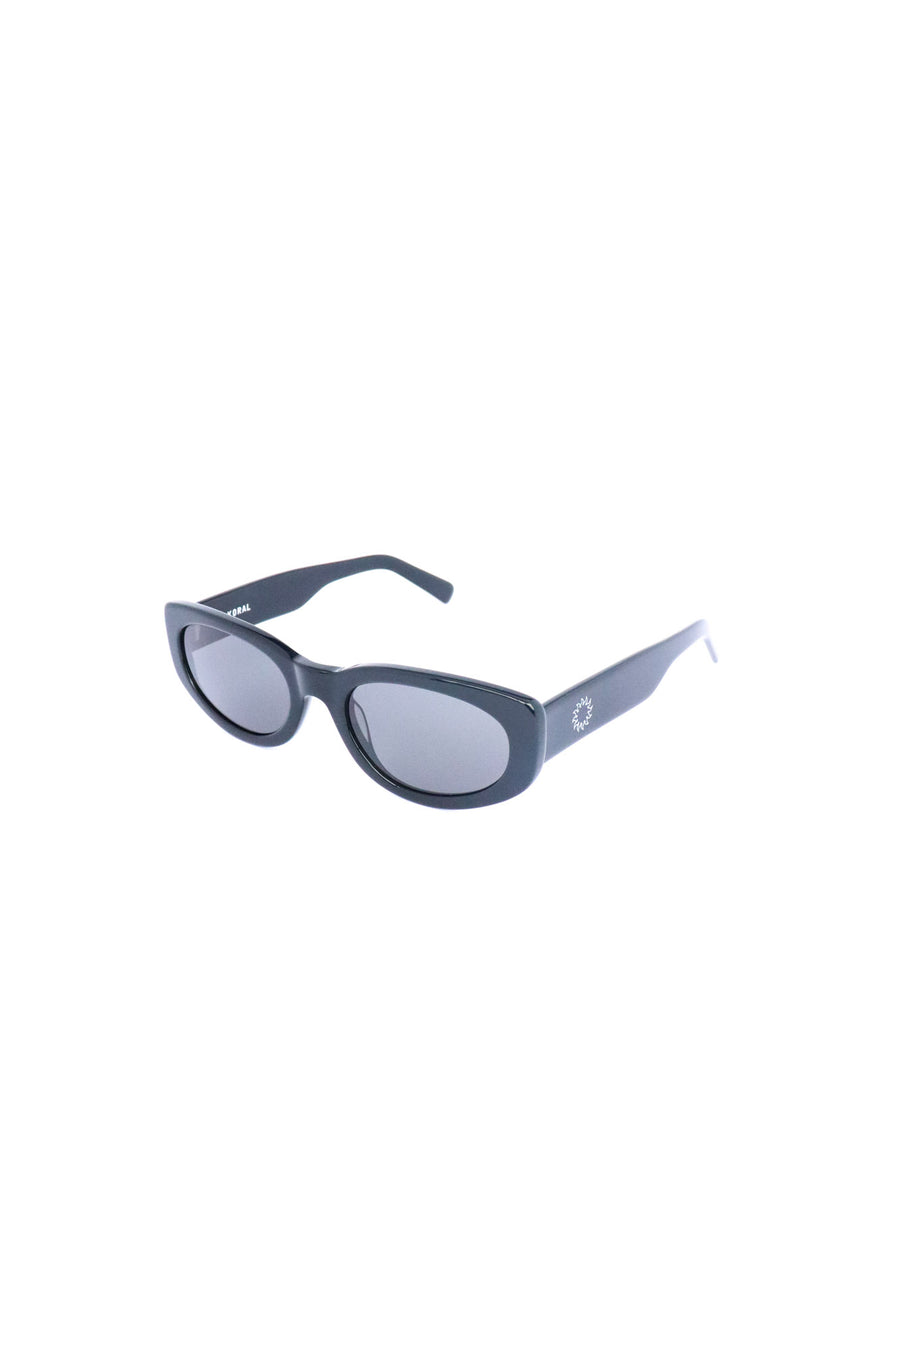 Avoir Eyewear - Koral in Midnight Black - Sunglasses